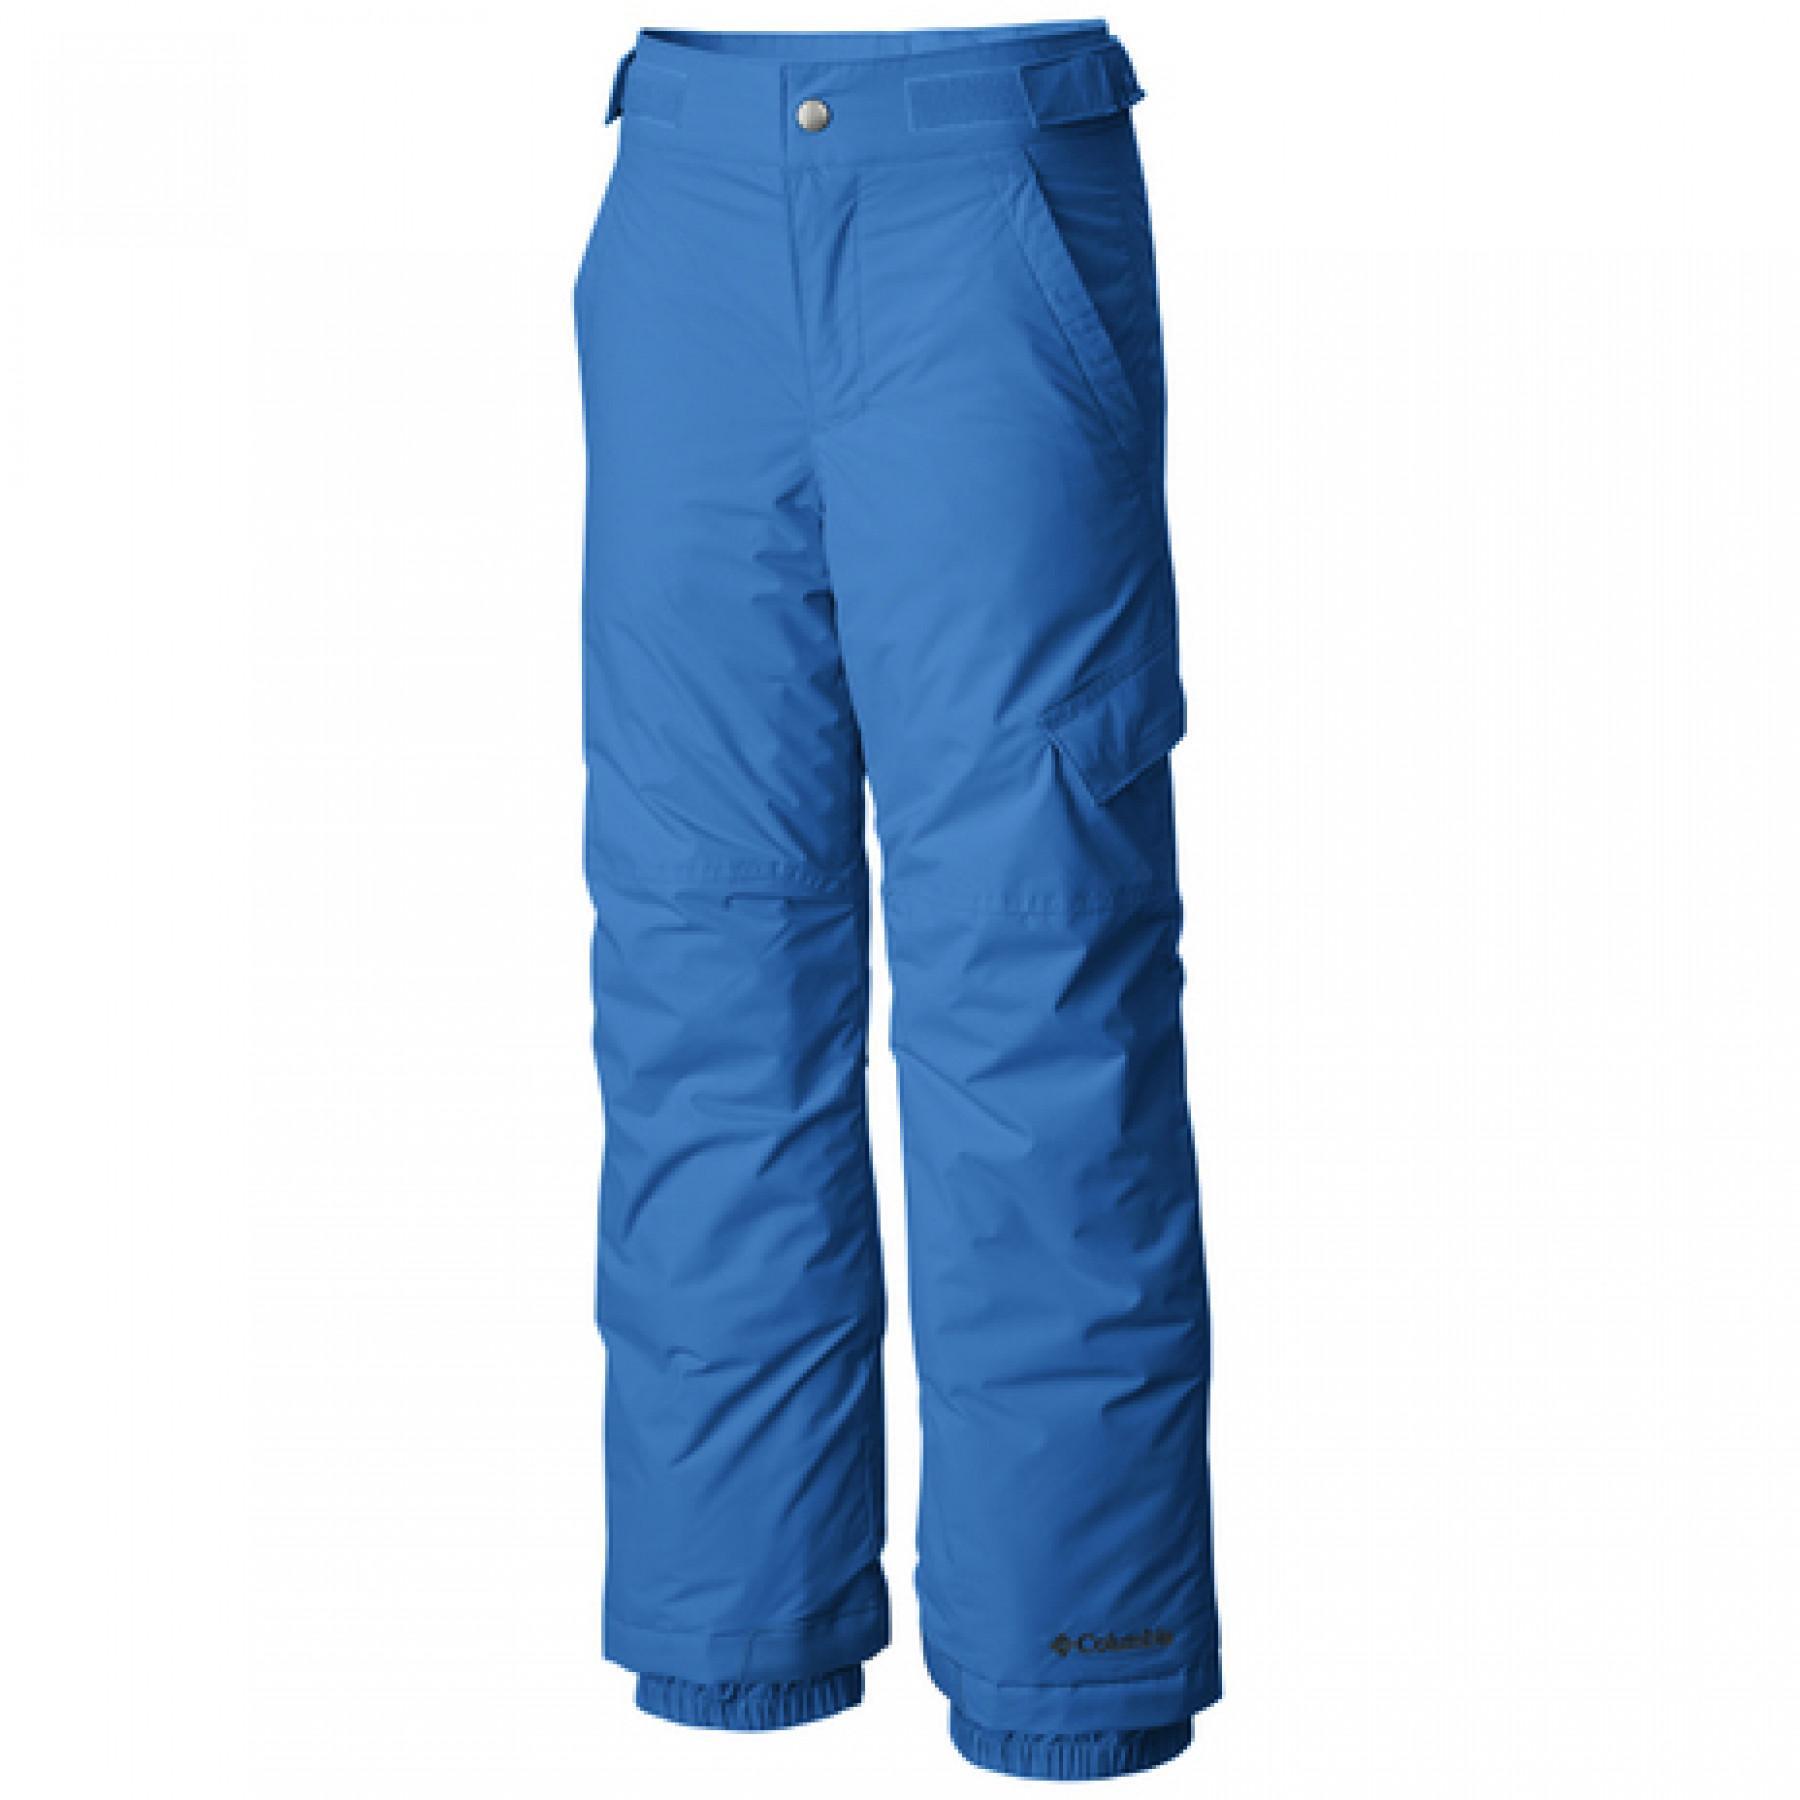 Children's trousers Columbia Ice Slope II